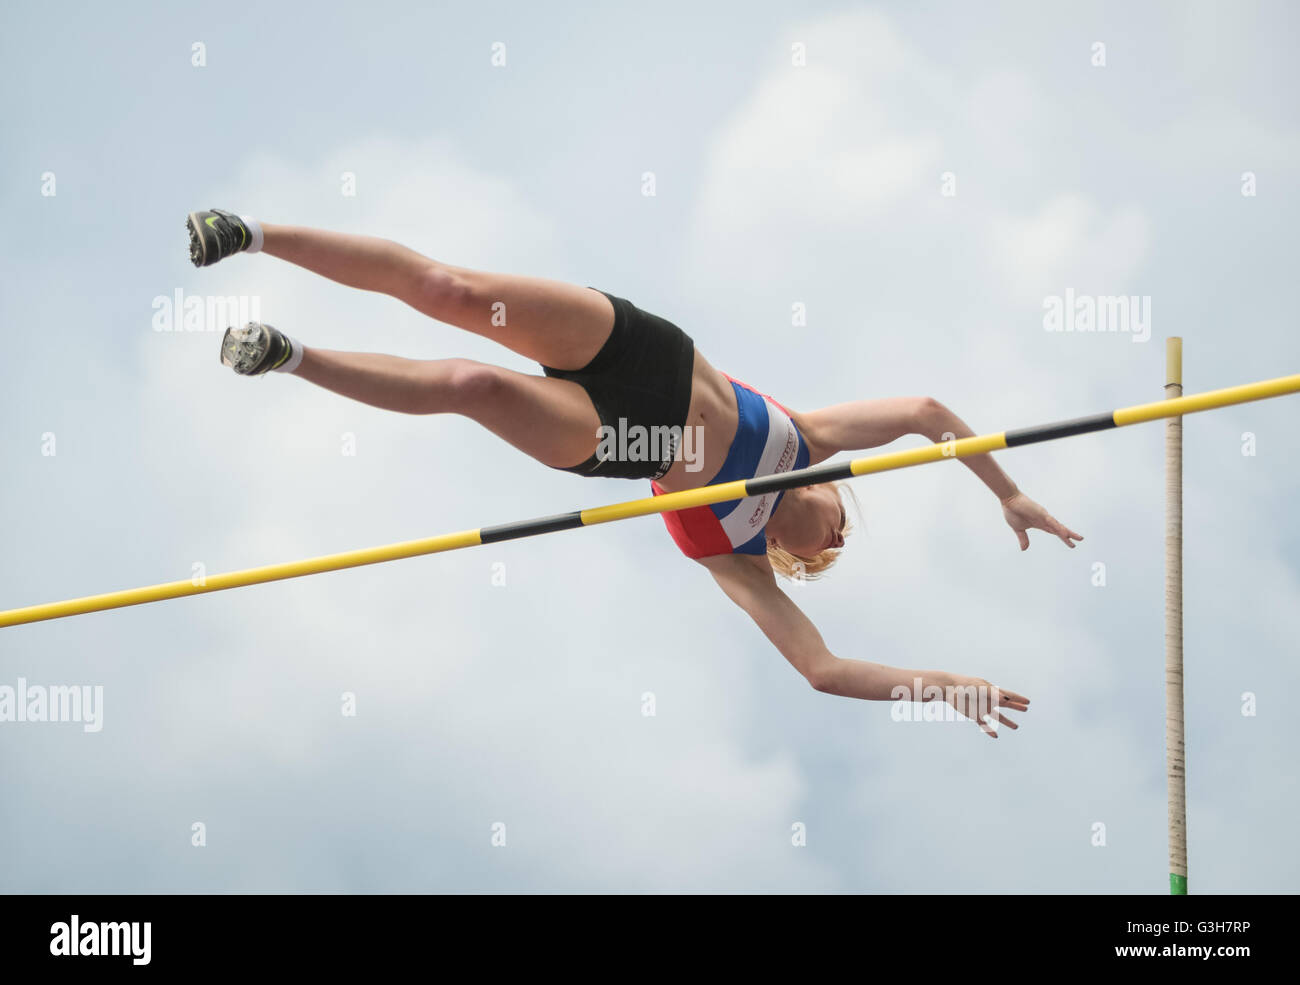 Athlete Jessica Swannack doing the pole vault at Birmingham Alexander Stadium 2016 Stock Photo